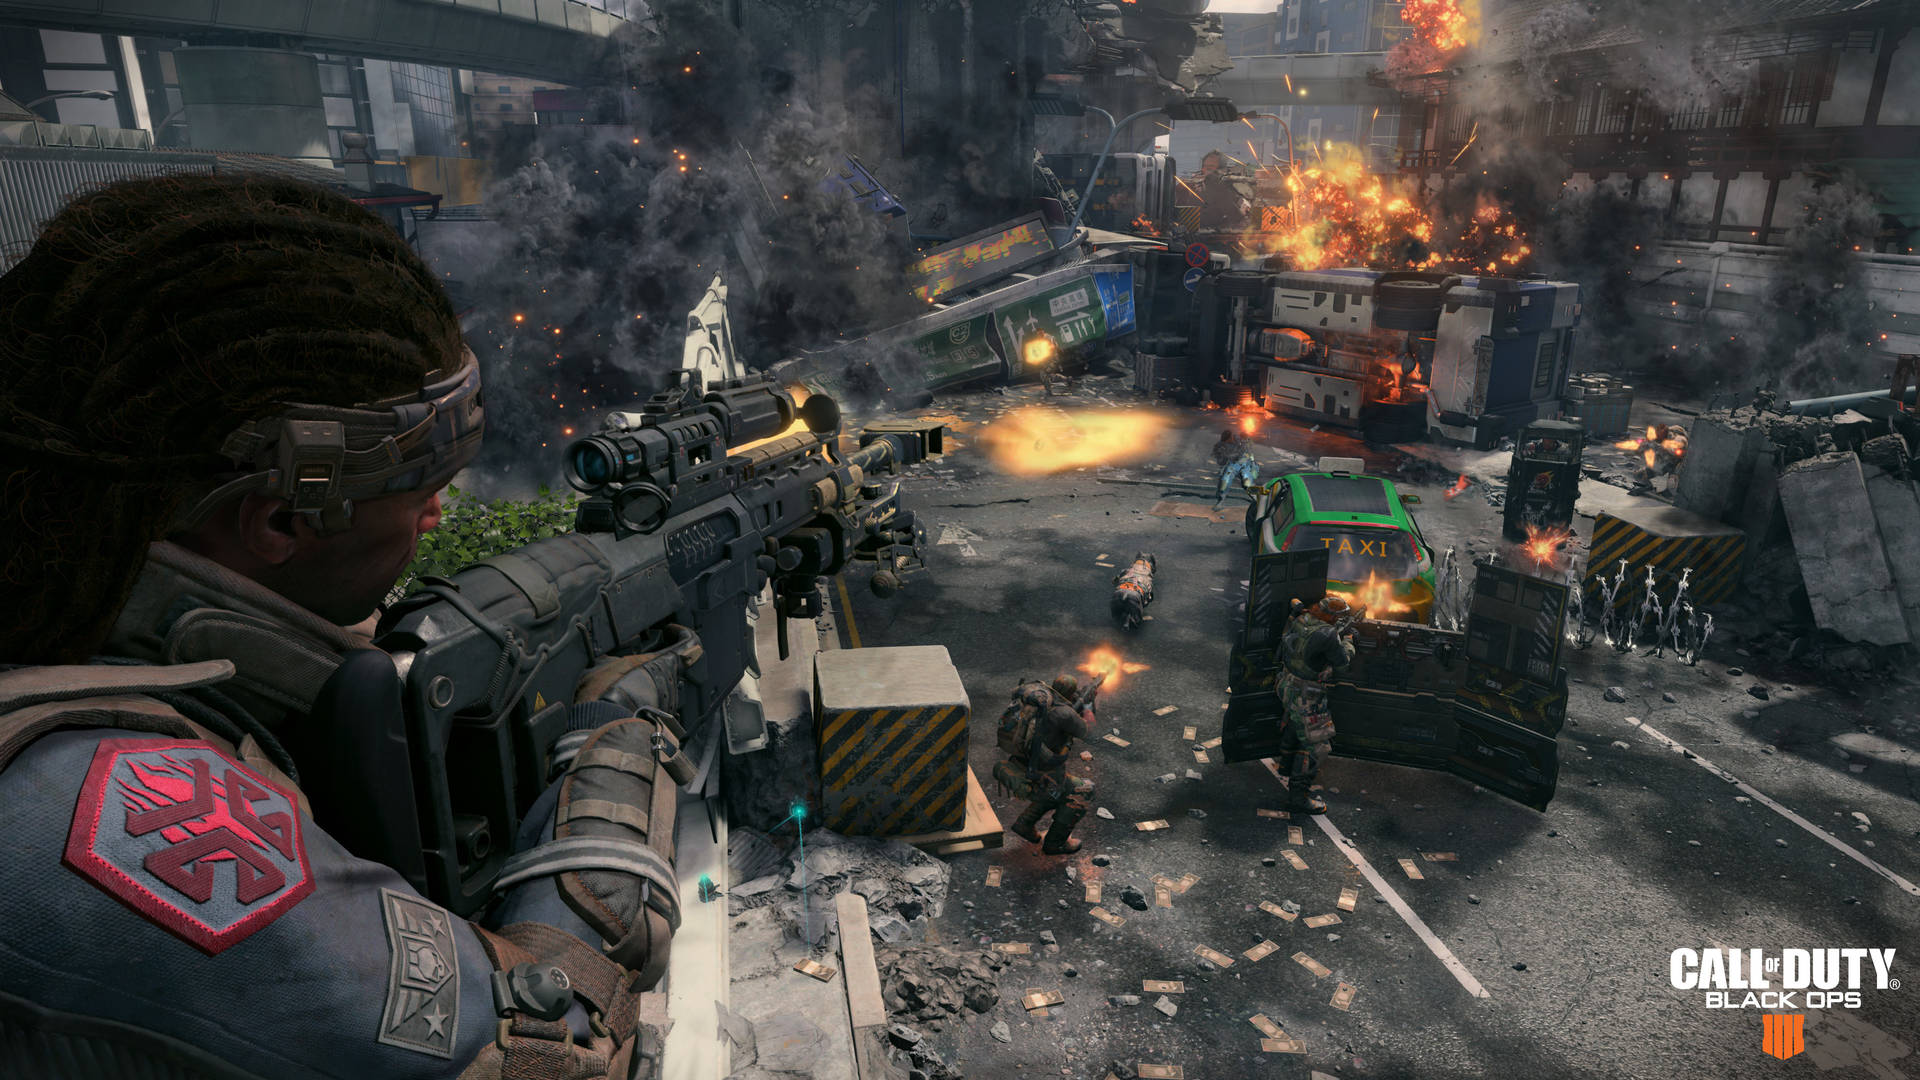 Cod Black Ops 4 Burning City Background